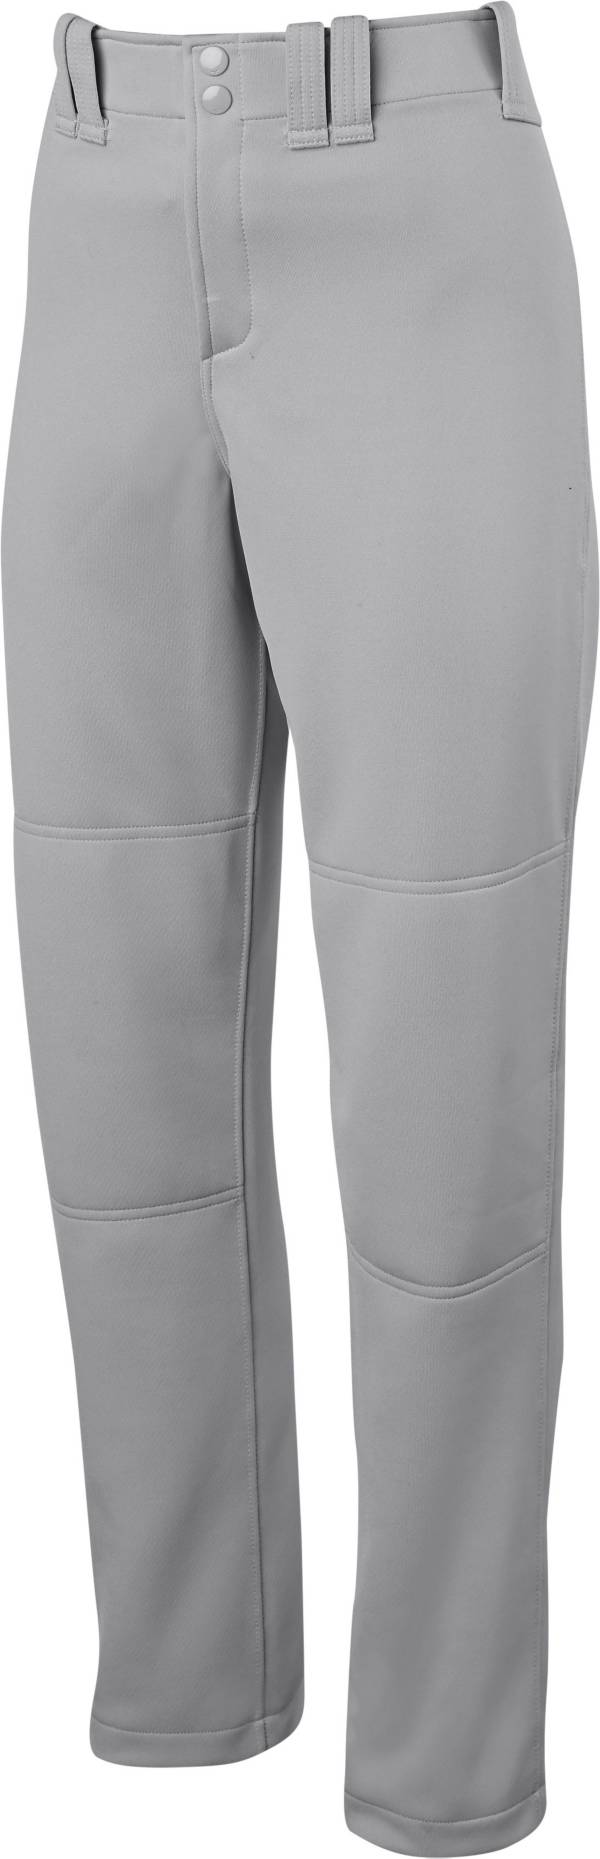 Mizuno Women's Full Length Softball Pants product image